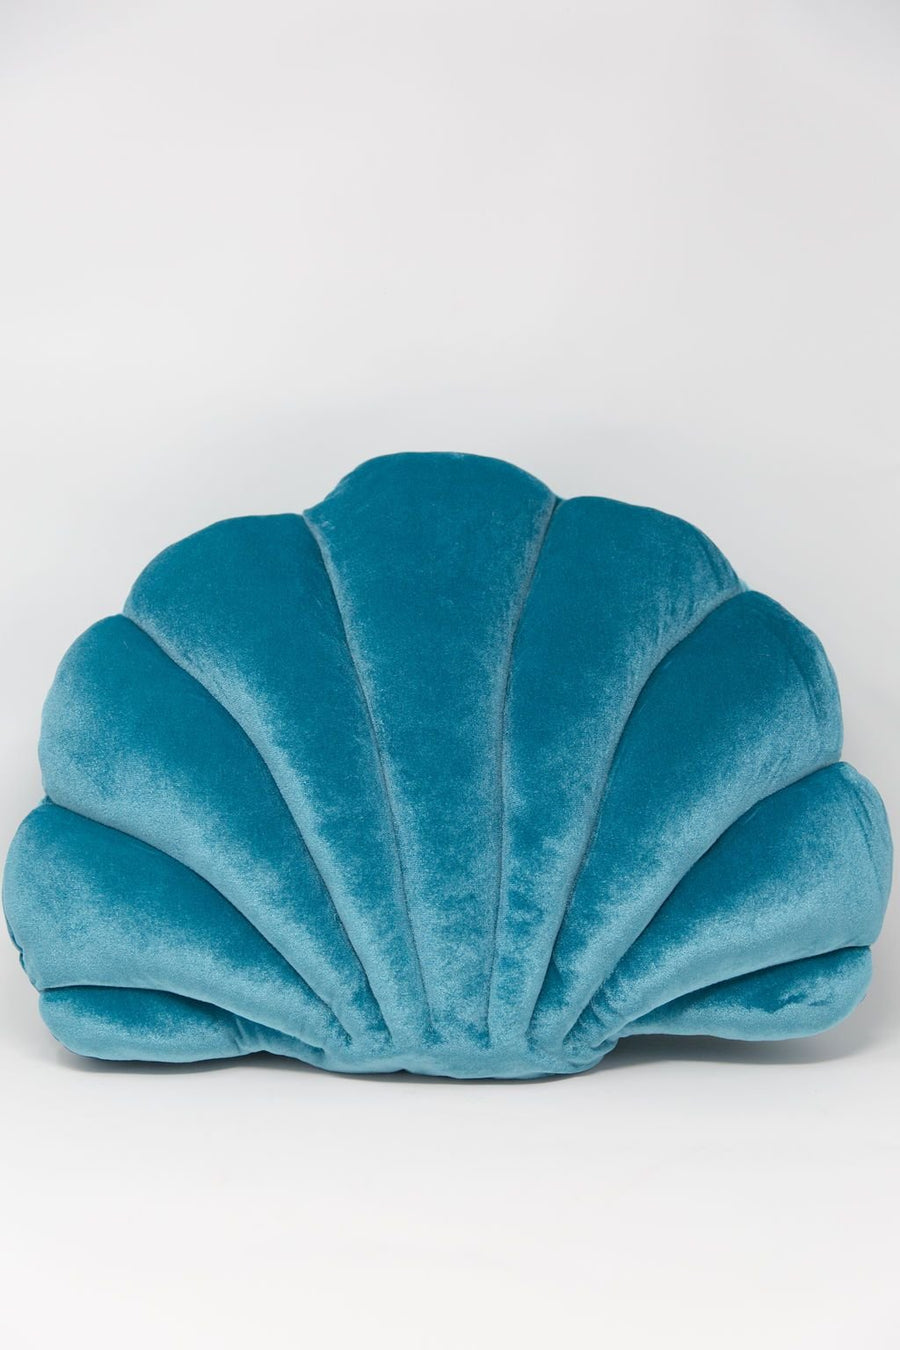 shelly pillow | medium seaglass